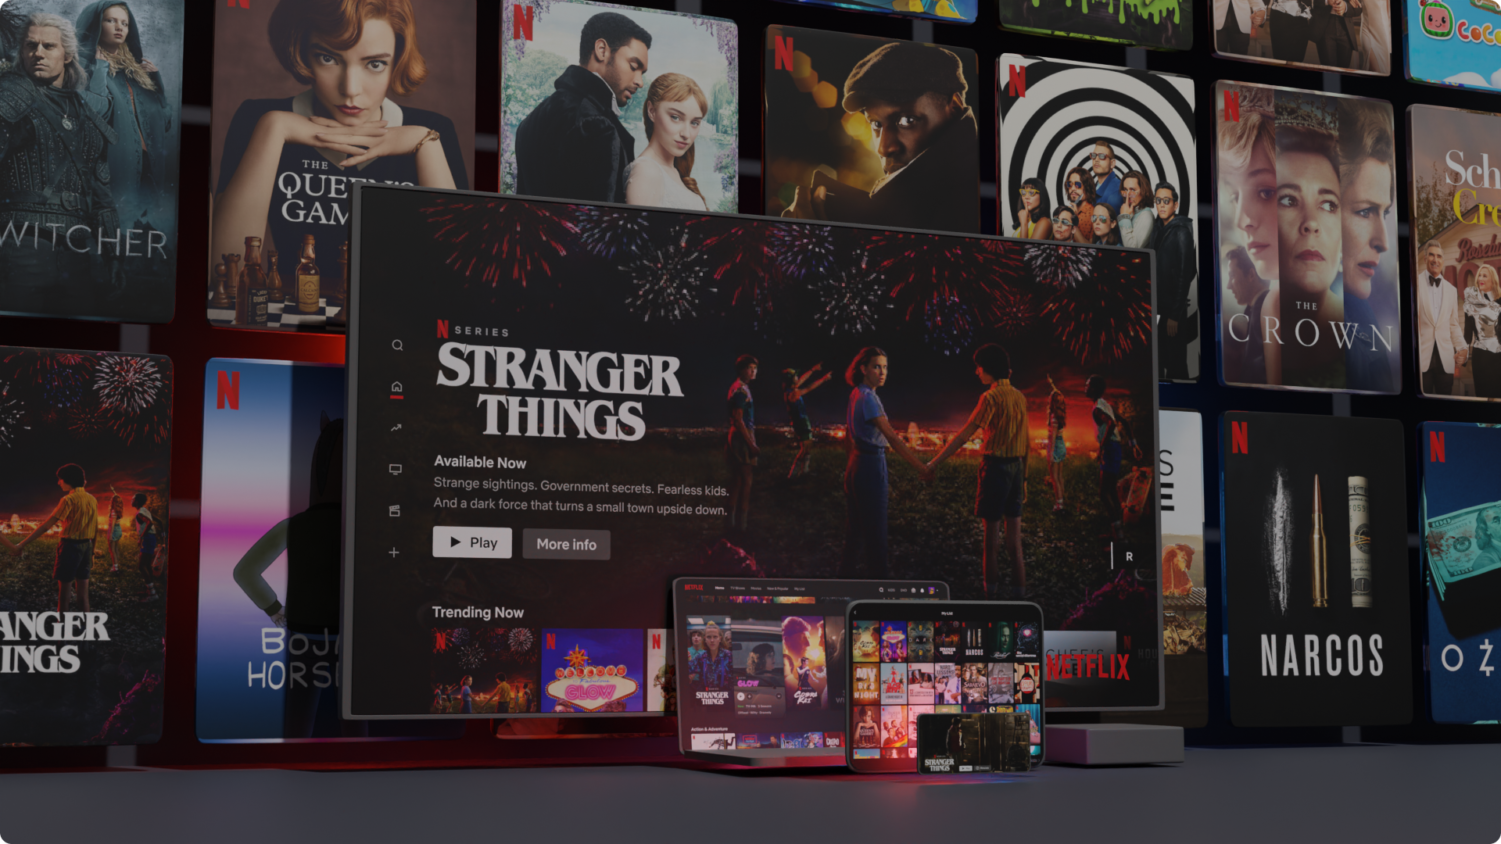 Netflixs plan to introduce advertisements